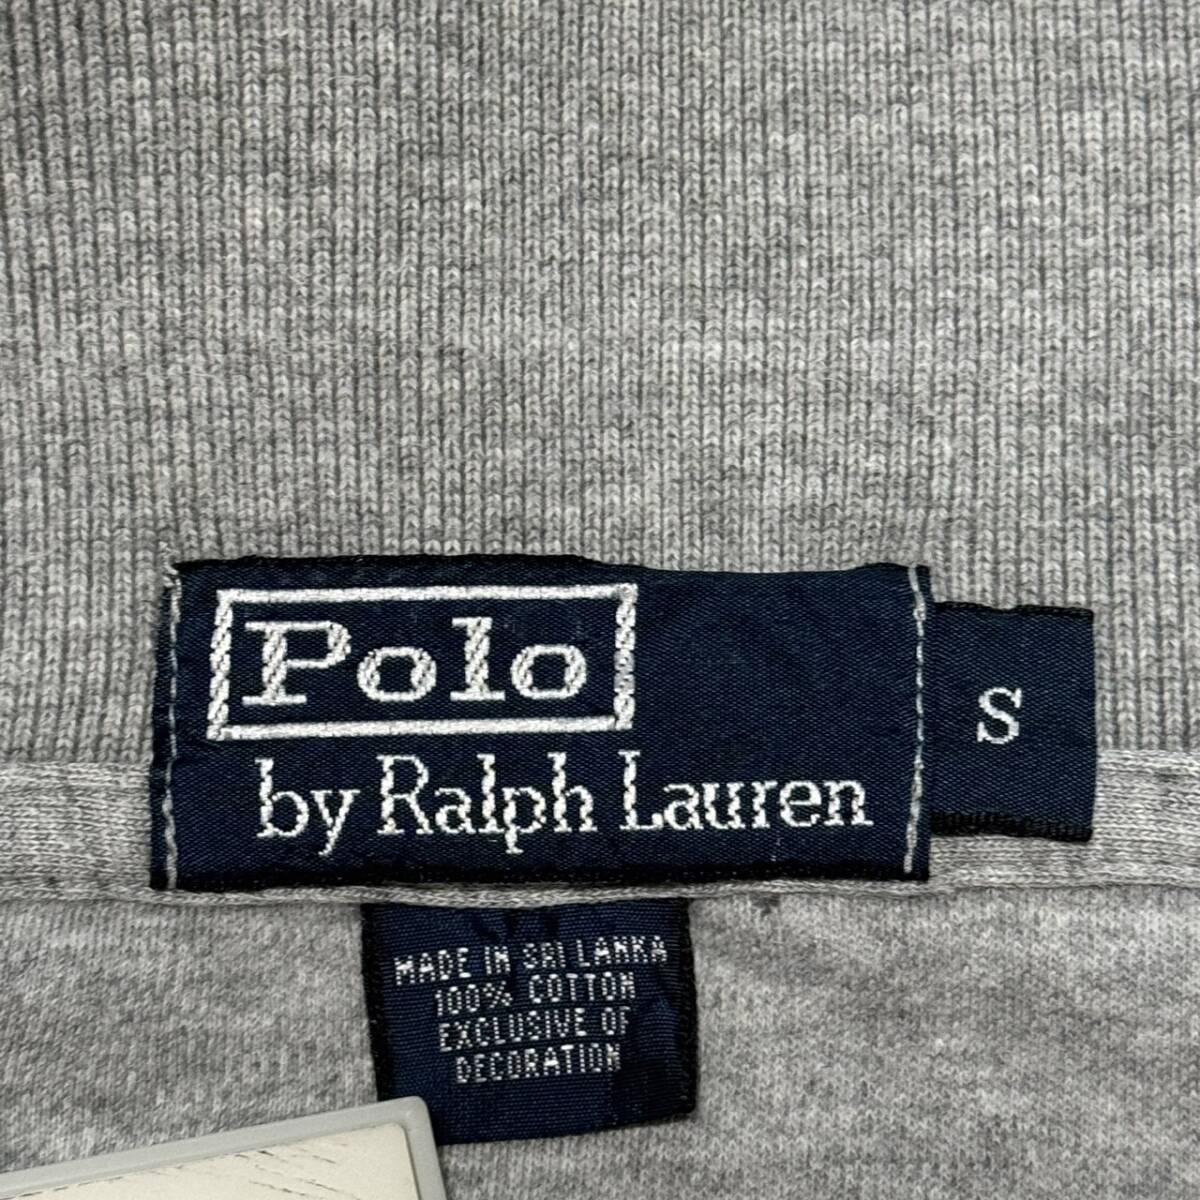  Ralph Lauren рубашка-поло Spo колено вышивка серый Polo